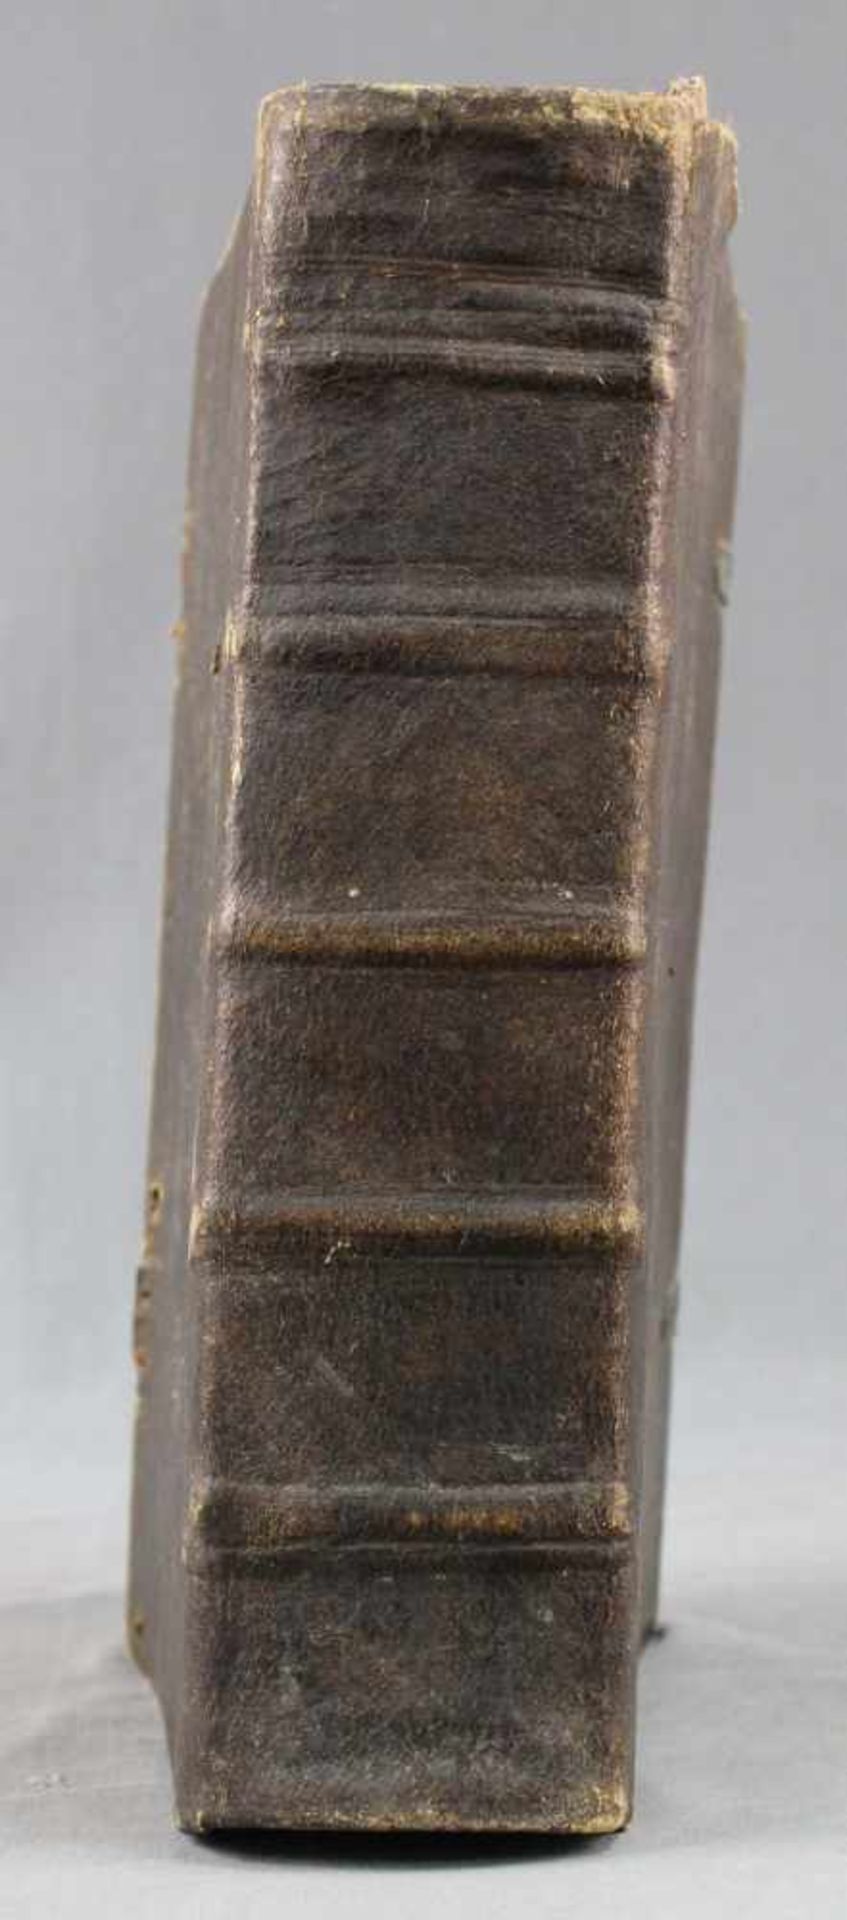 Illustrierte Bibel, Nürnberg 1667.36 cm x 25 cm. U.a. teils restauriert, teils unvollständig. - Image 3 of 9